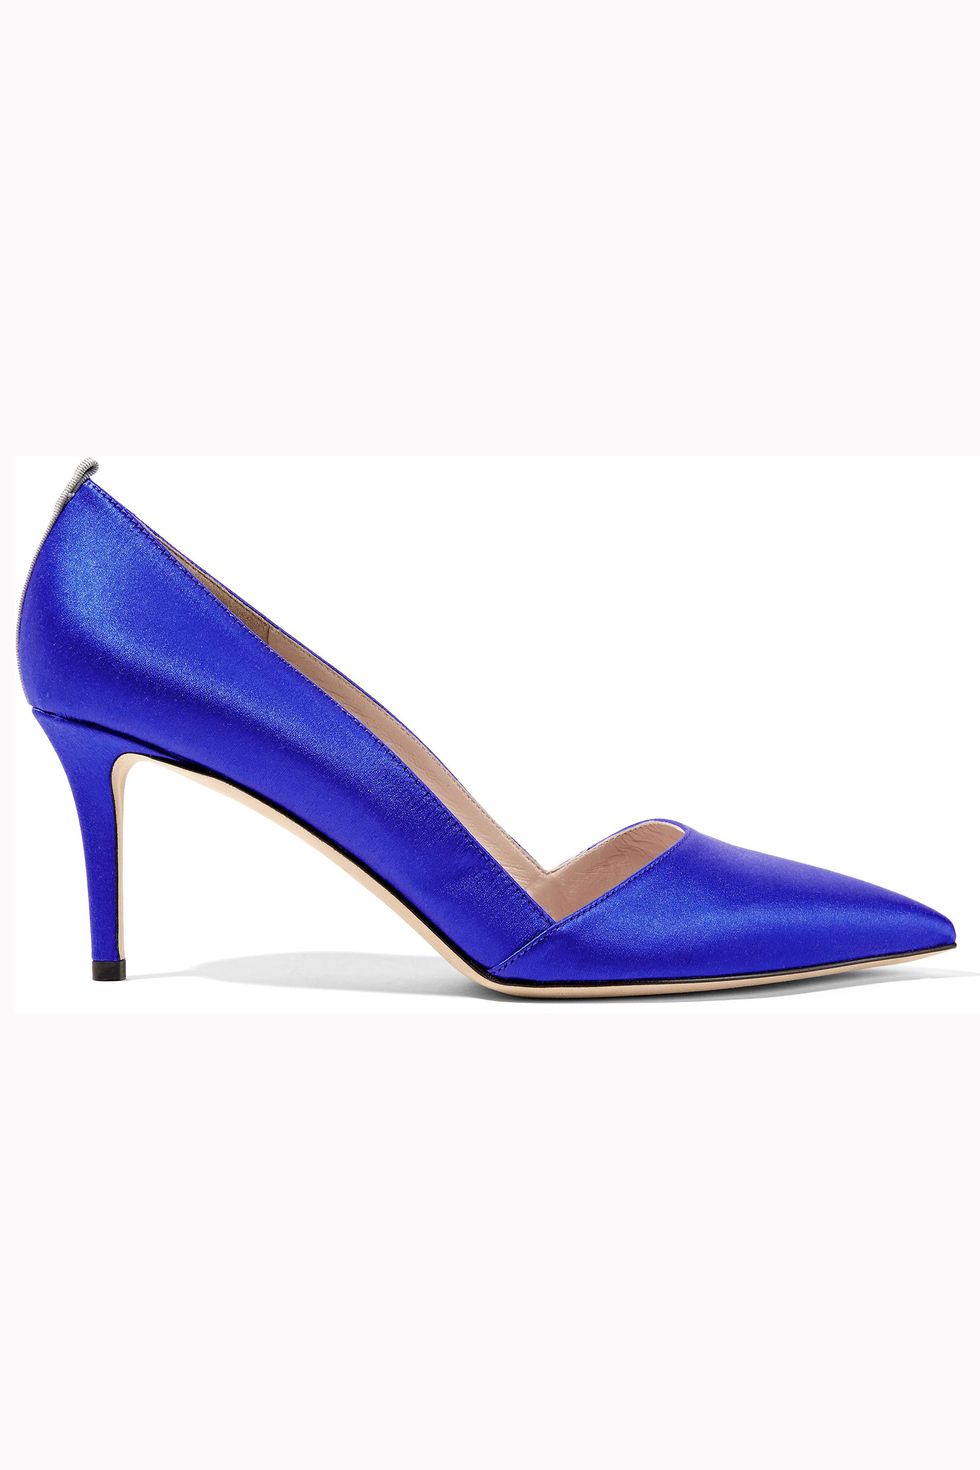 Footwear, Blue, High heels, Electric blue, Basic pump, Azure, Cobalt blue, Beige, Sandal, Court shoe, 